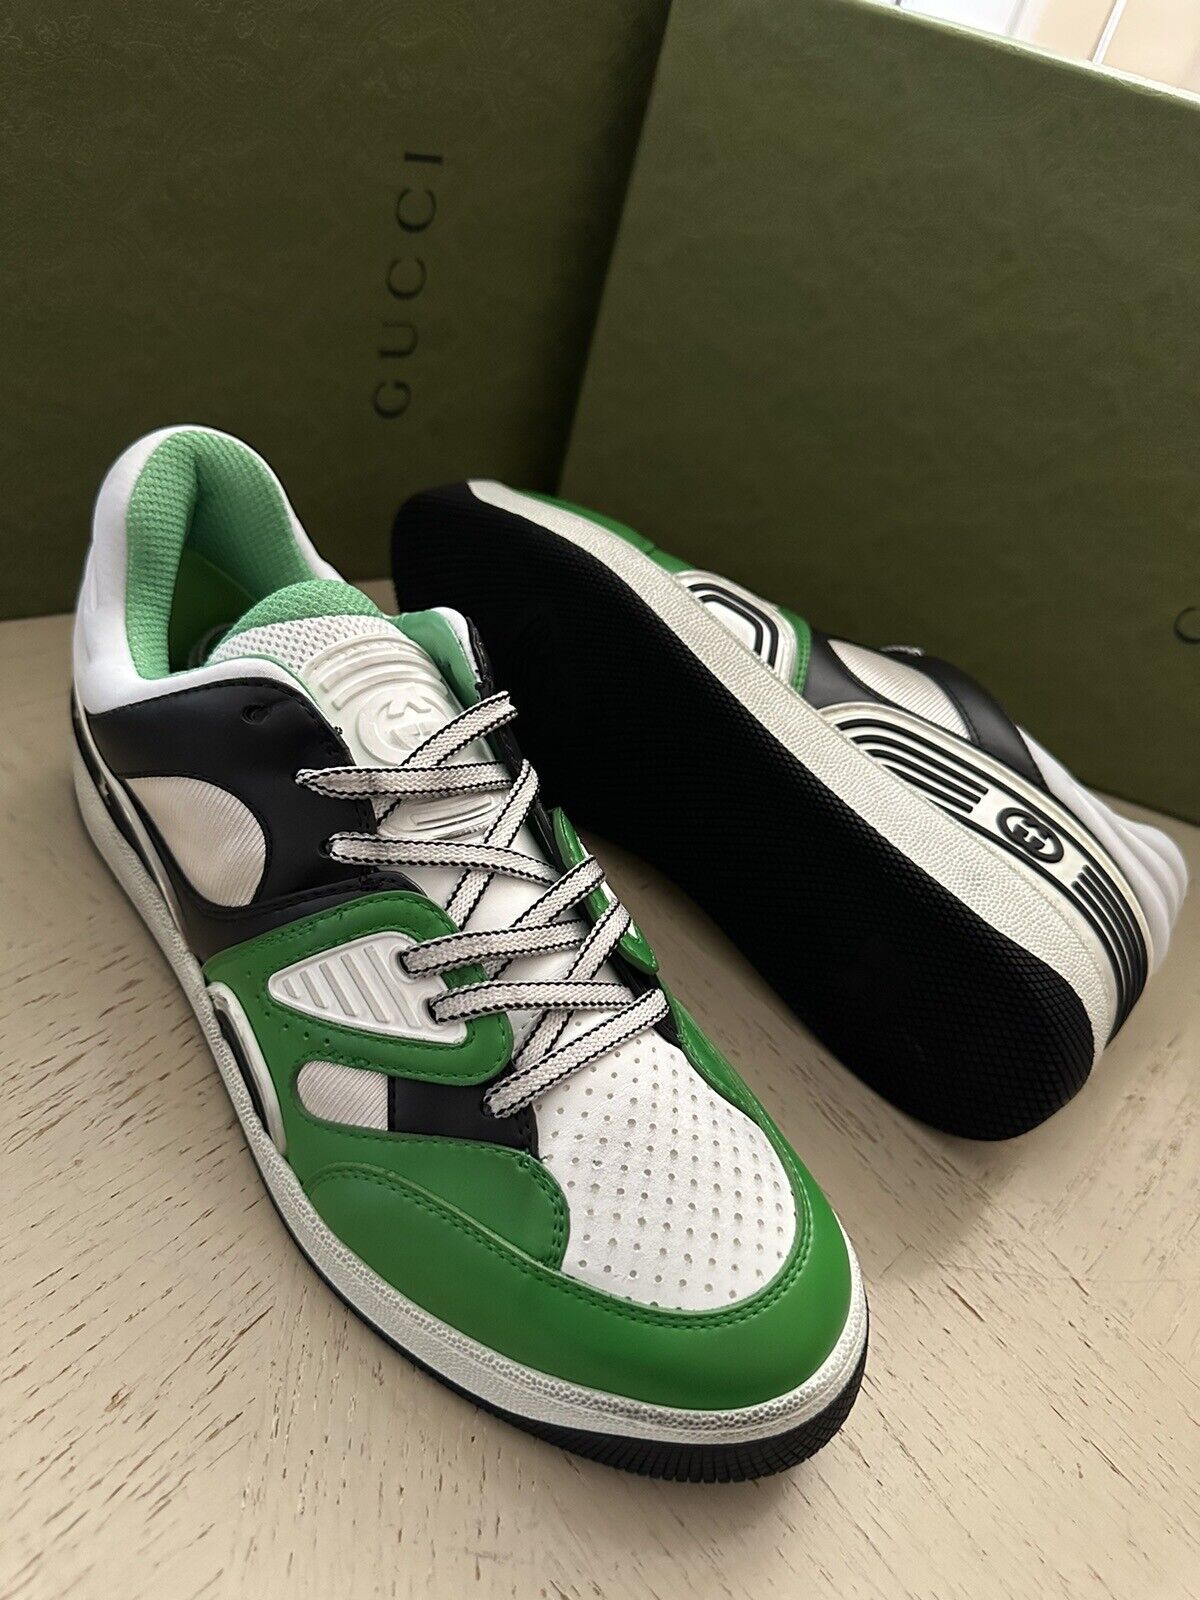 New $950 Gucci Men Demetra Basket Low Top Sneakers Green/Whi 9.5 US/9 UK 697882